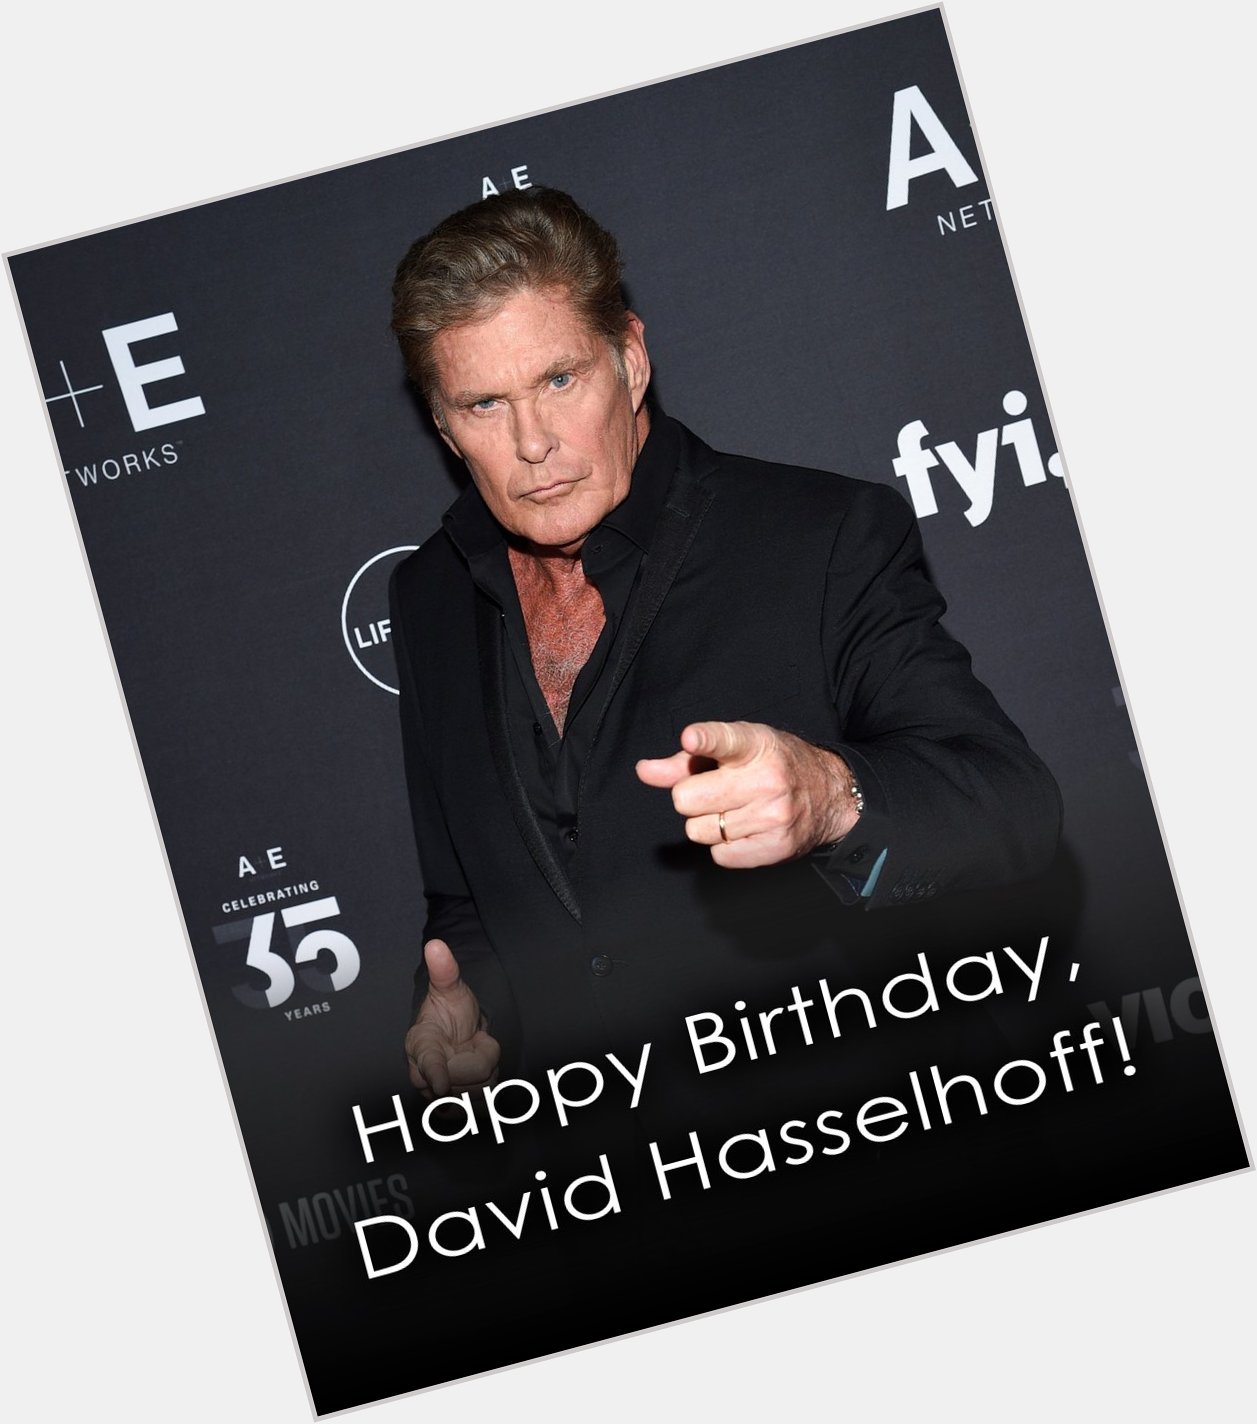 HAPPY BIRTHDAY DAVID HASSELHOFF! \"The Hoff\" is hitting the big 7-0 today.  